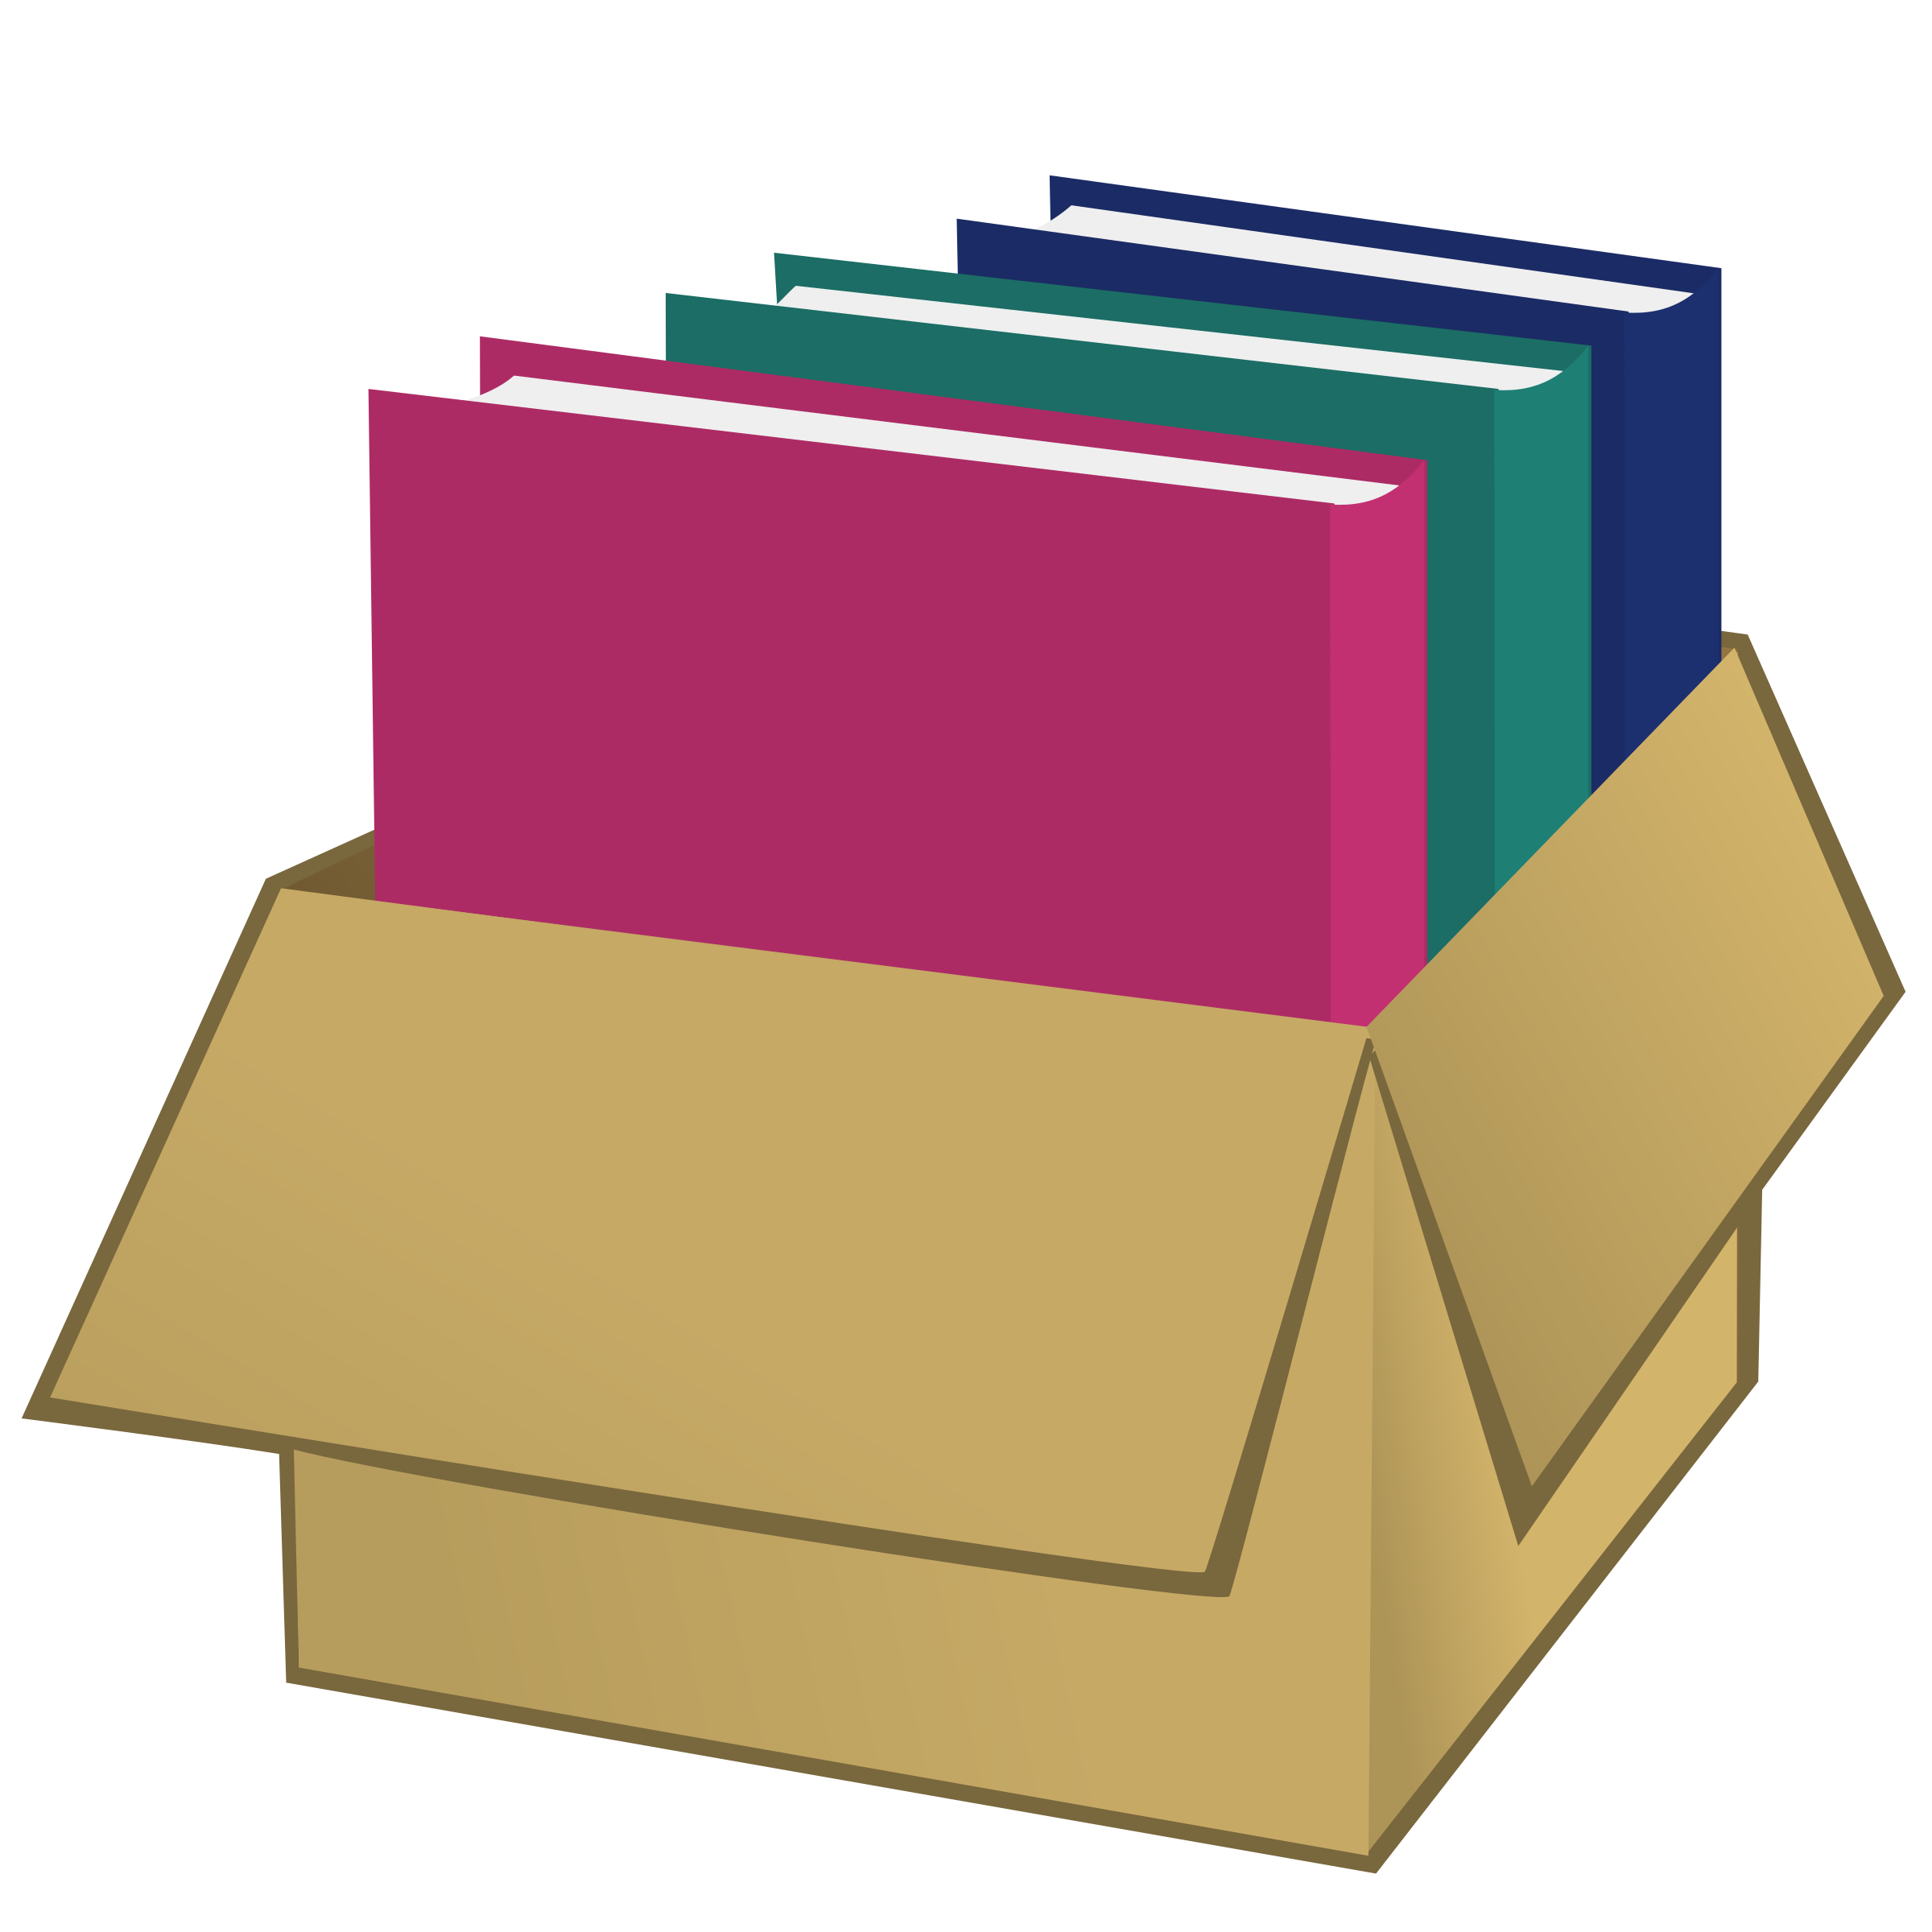 Folder clipart box book. With folders big image